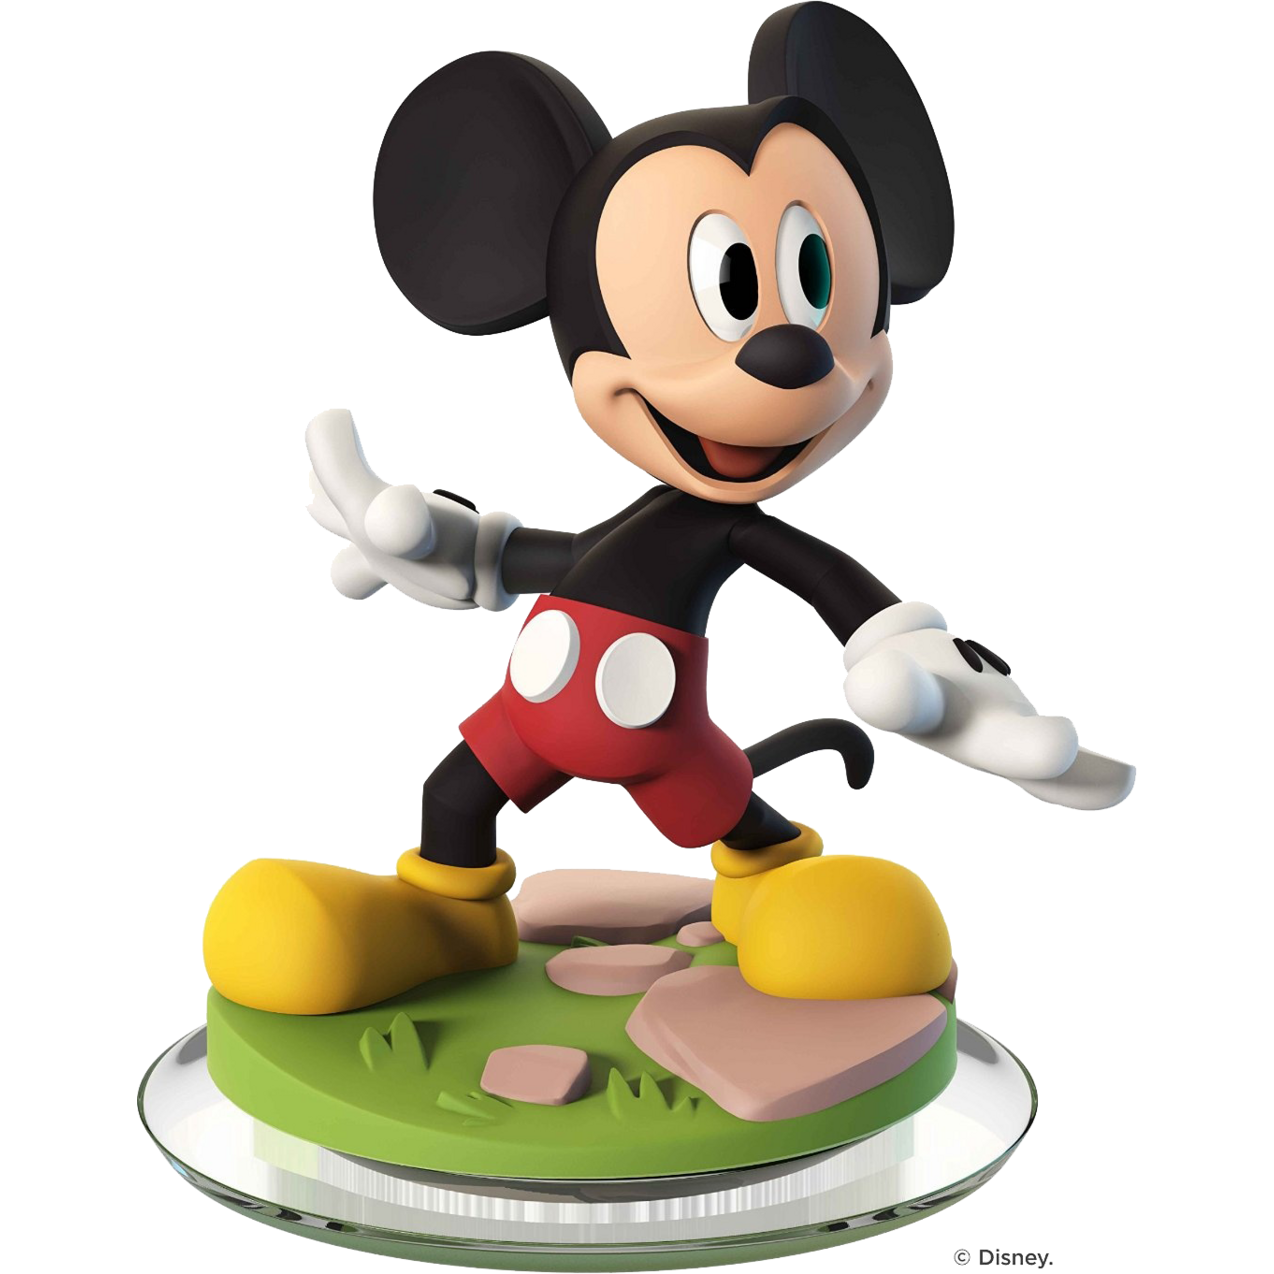 Disney Infinity 3.0 - Mickey Mouse Figure